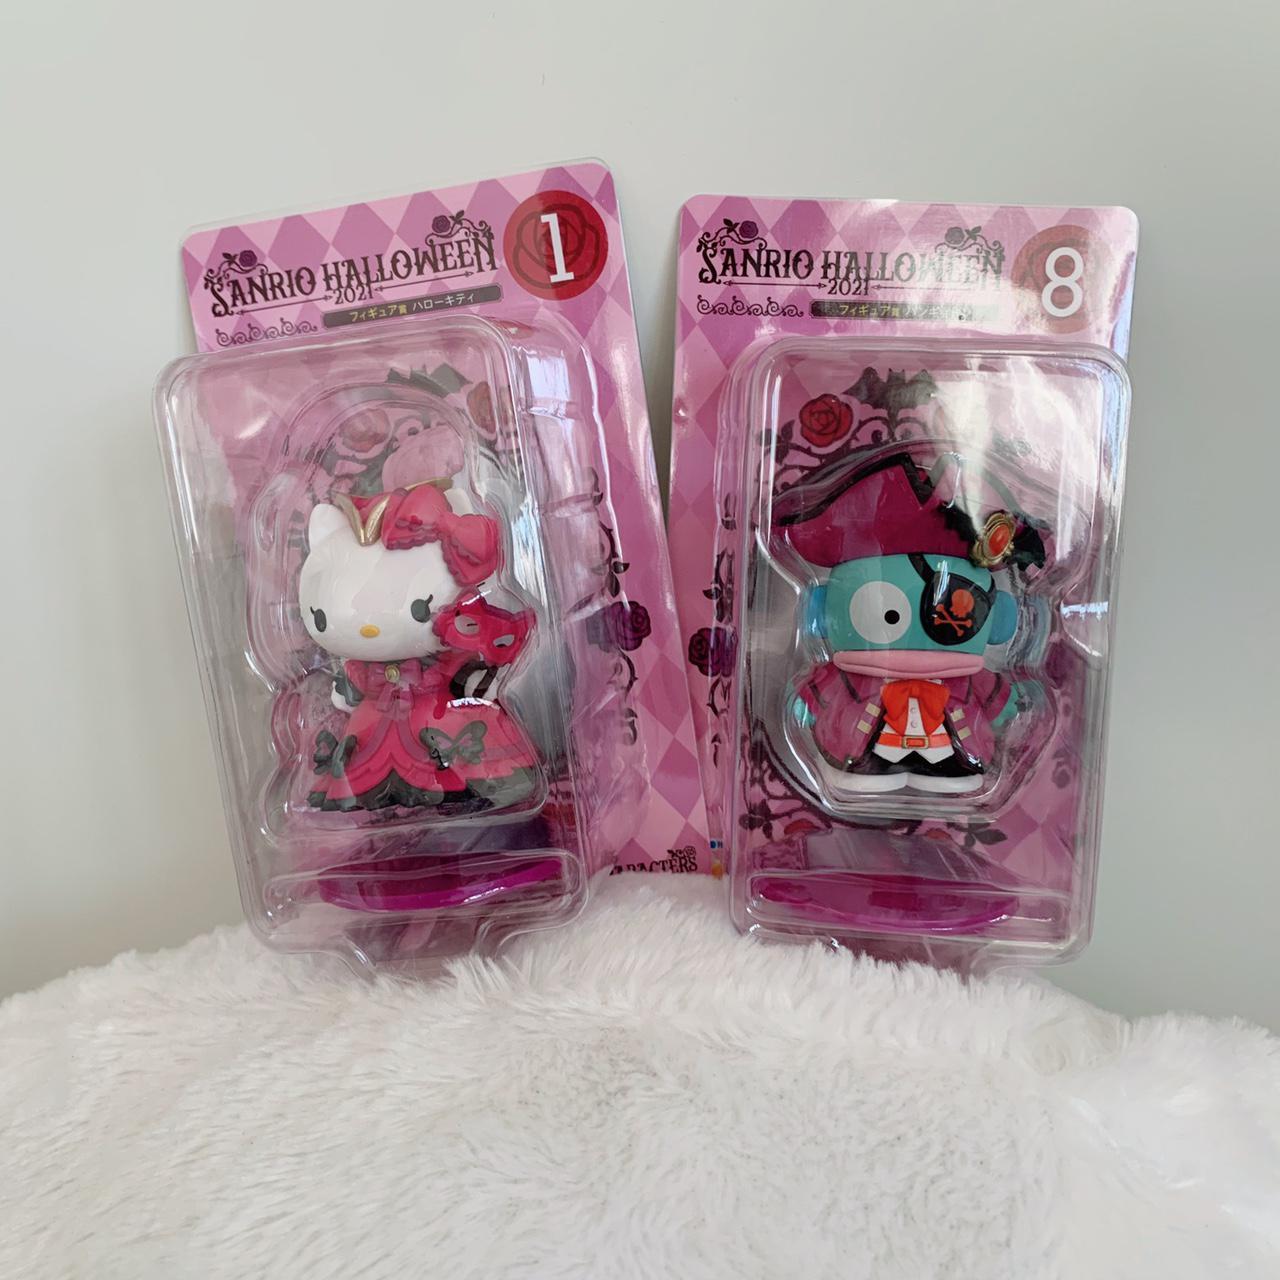 Product Image 4 - Sanrio Halloween 2021 Hello Kitty